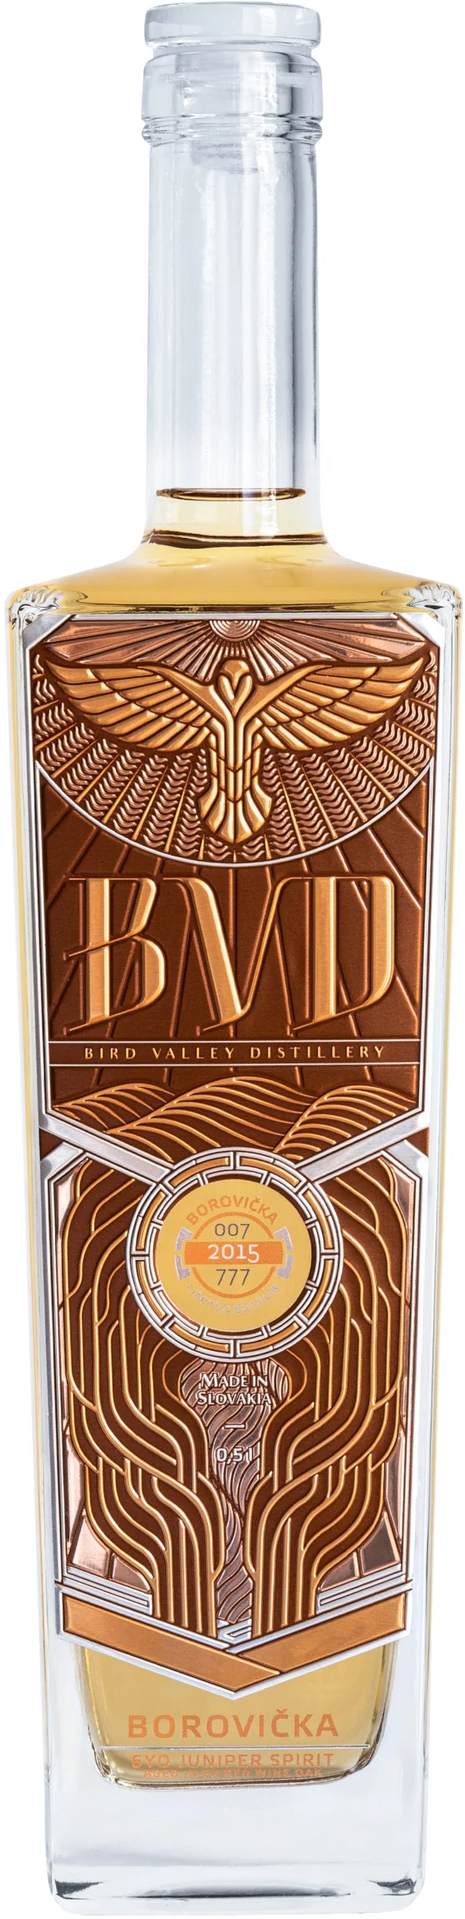 BVD Borovička Oak Aged 6 ročná 44,8% 0,5l (čistá fľaša)